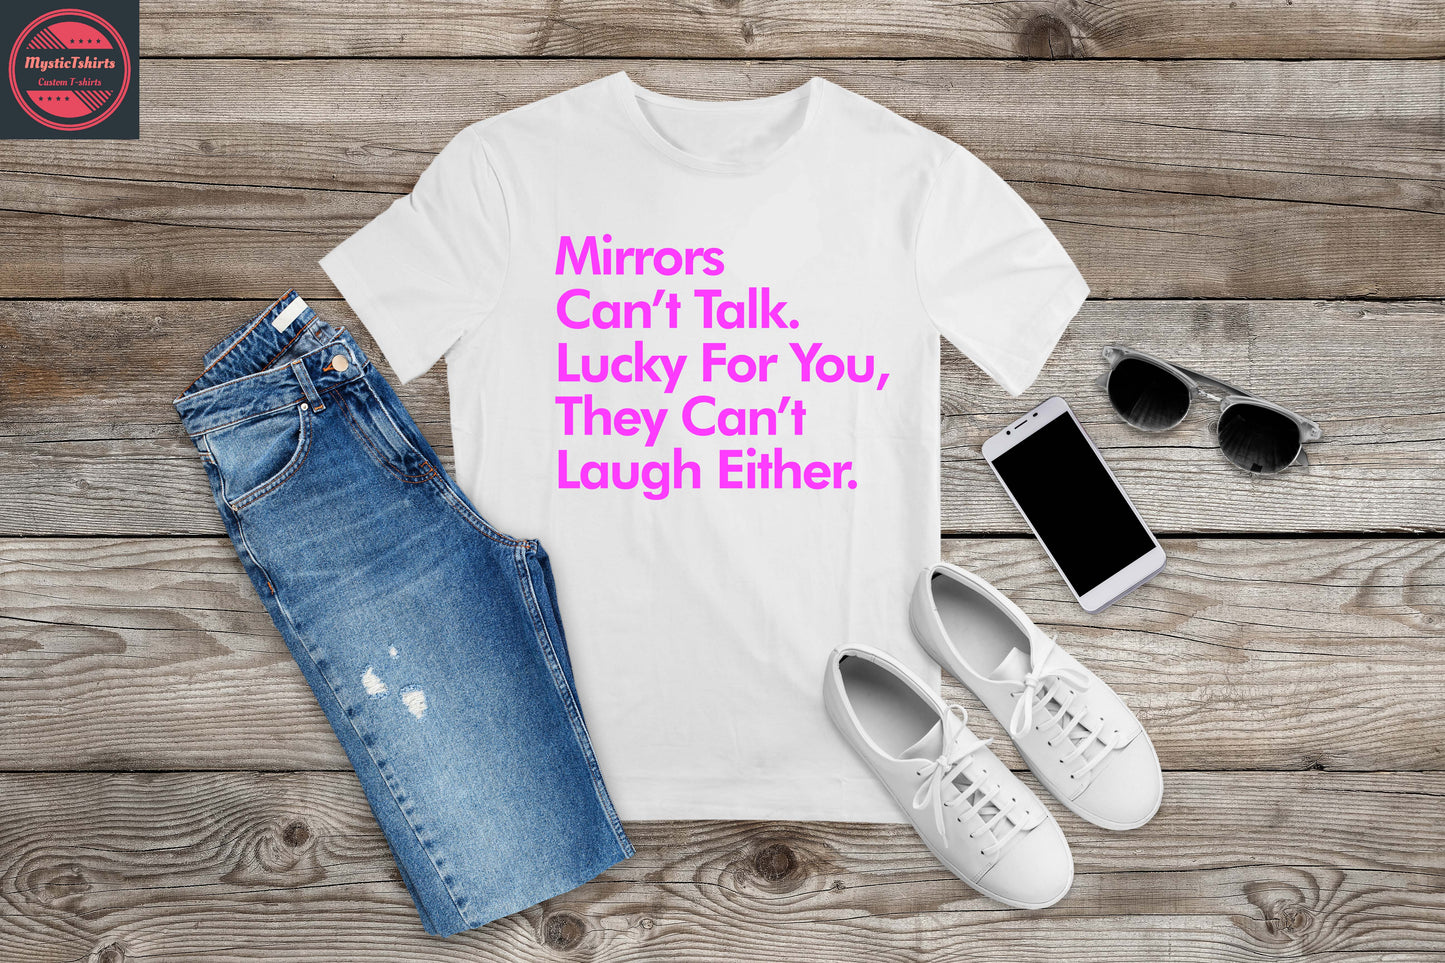 319. MIRRORS CAN'T TALK, Custom Made Shirt, Personalized T-Shirt, Custom Text, Make Your Own Shirt, Custom Tee